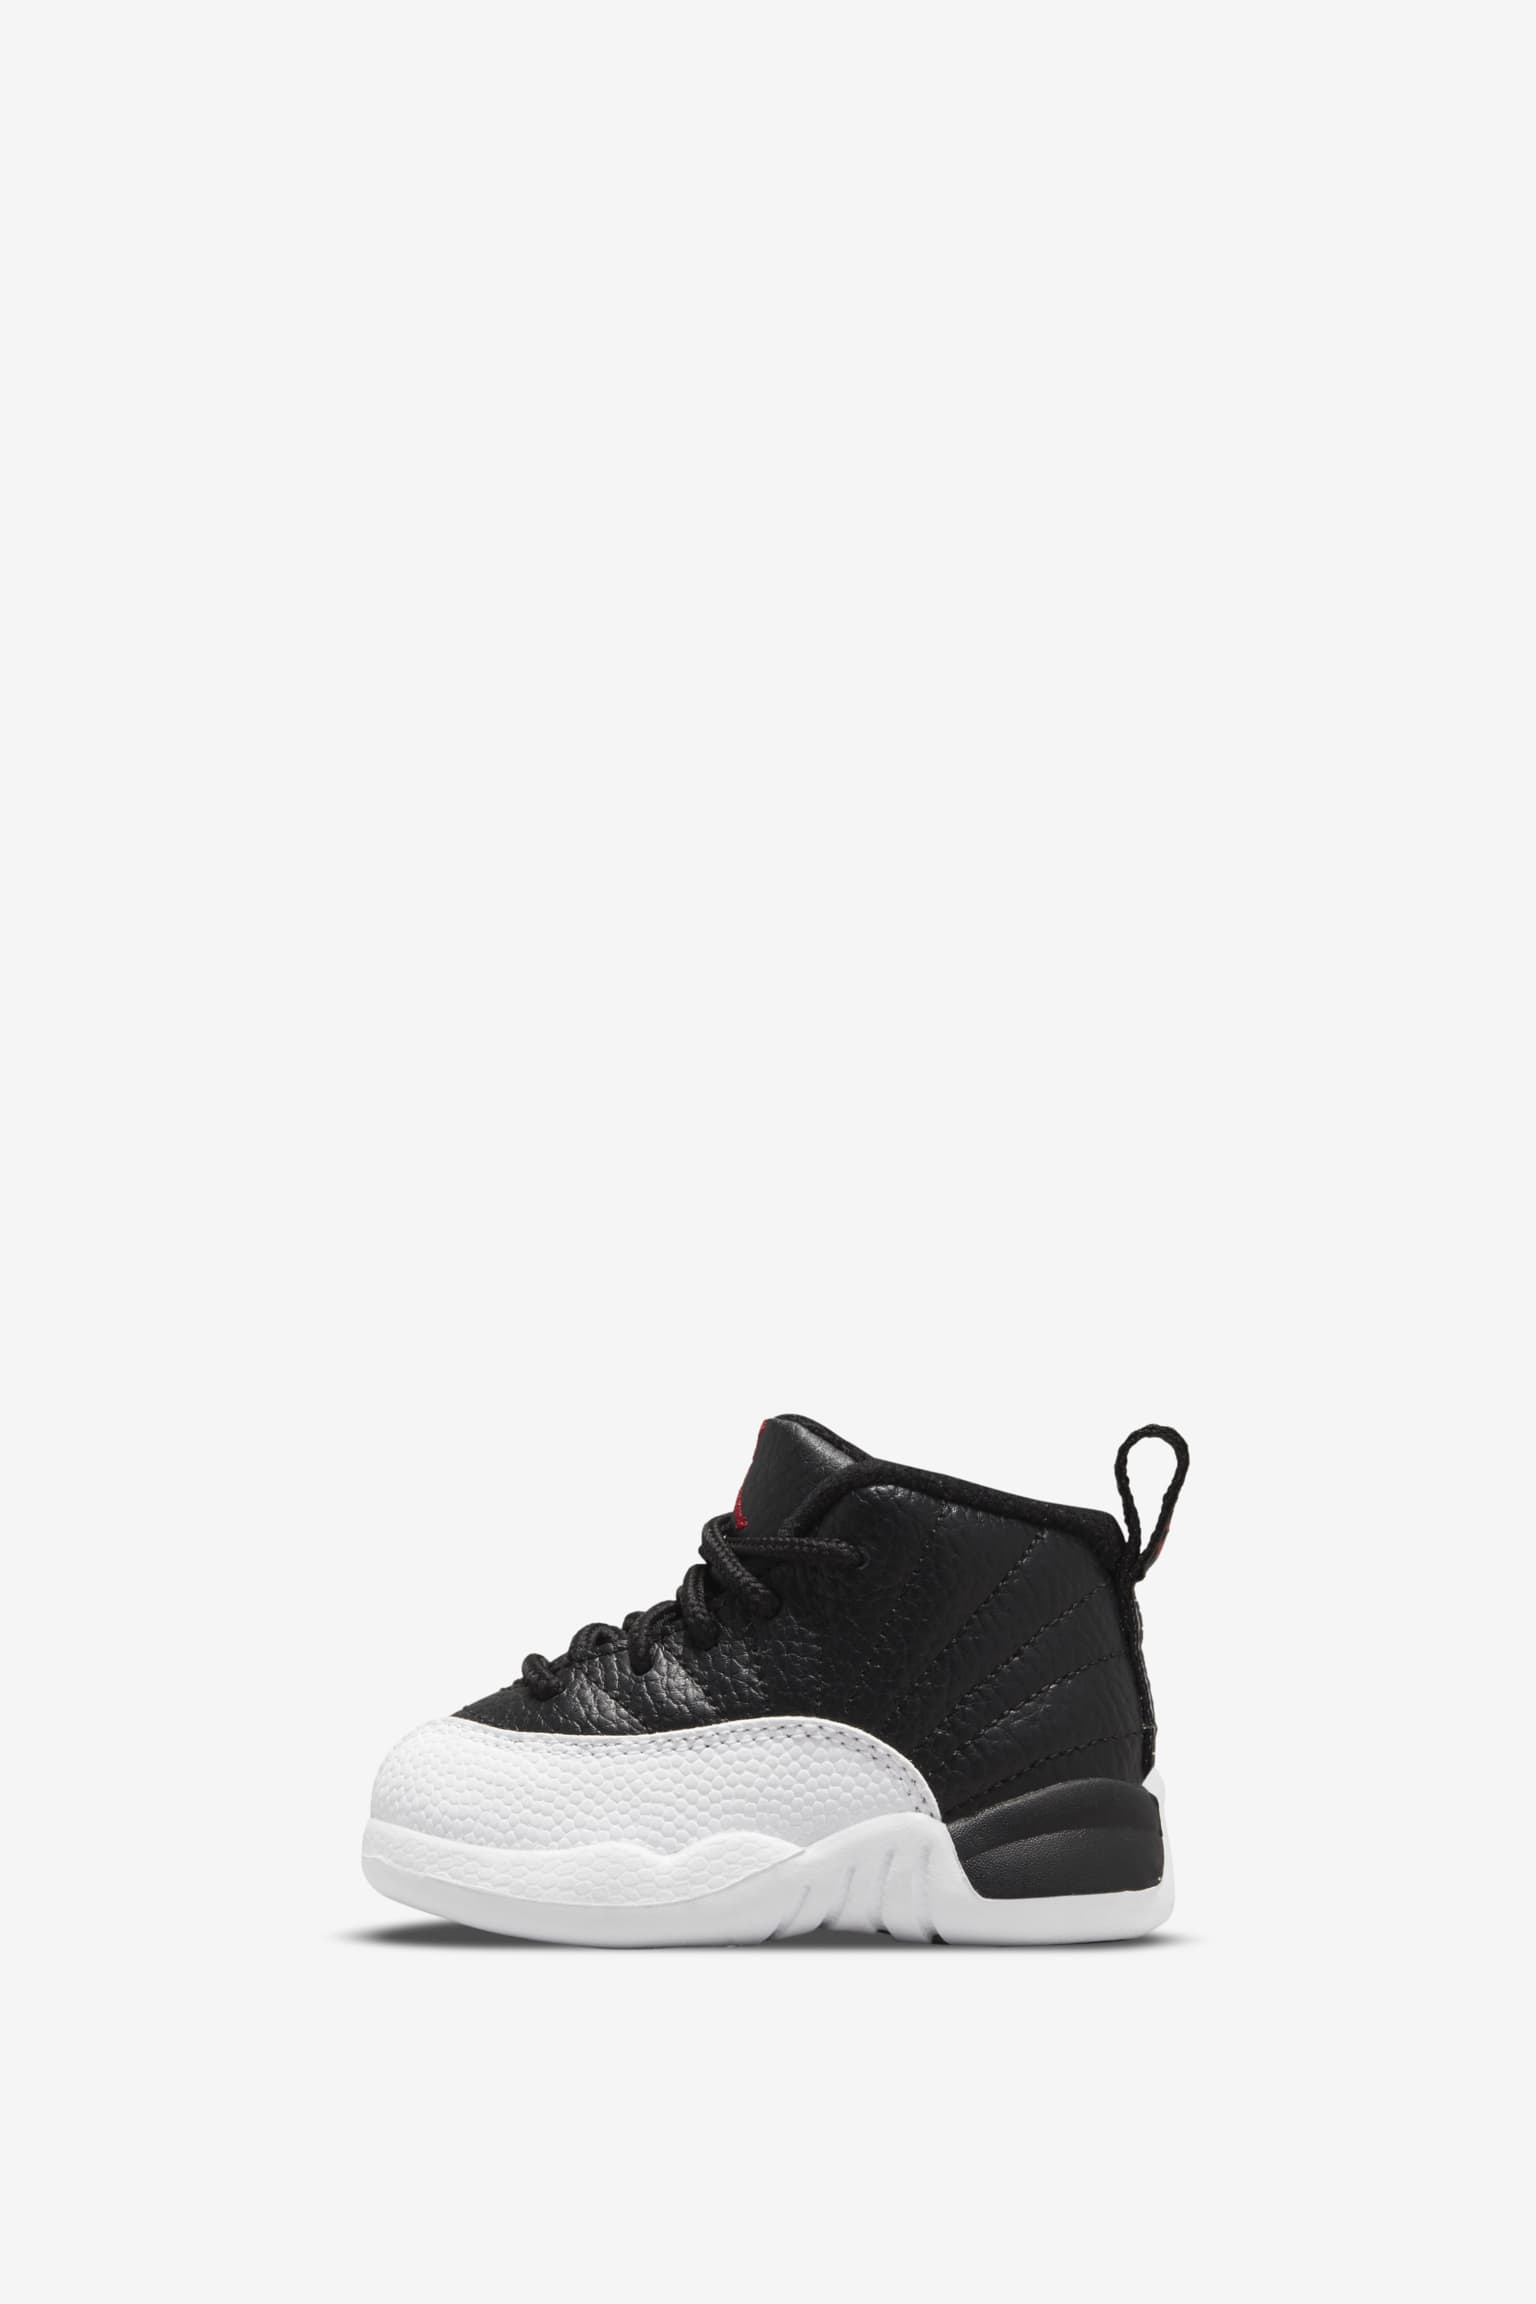 Air Jordan 12 'Playoffs' (CT8013-006) Release Date. Nike SNKRS IN